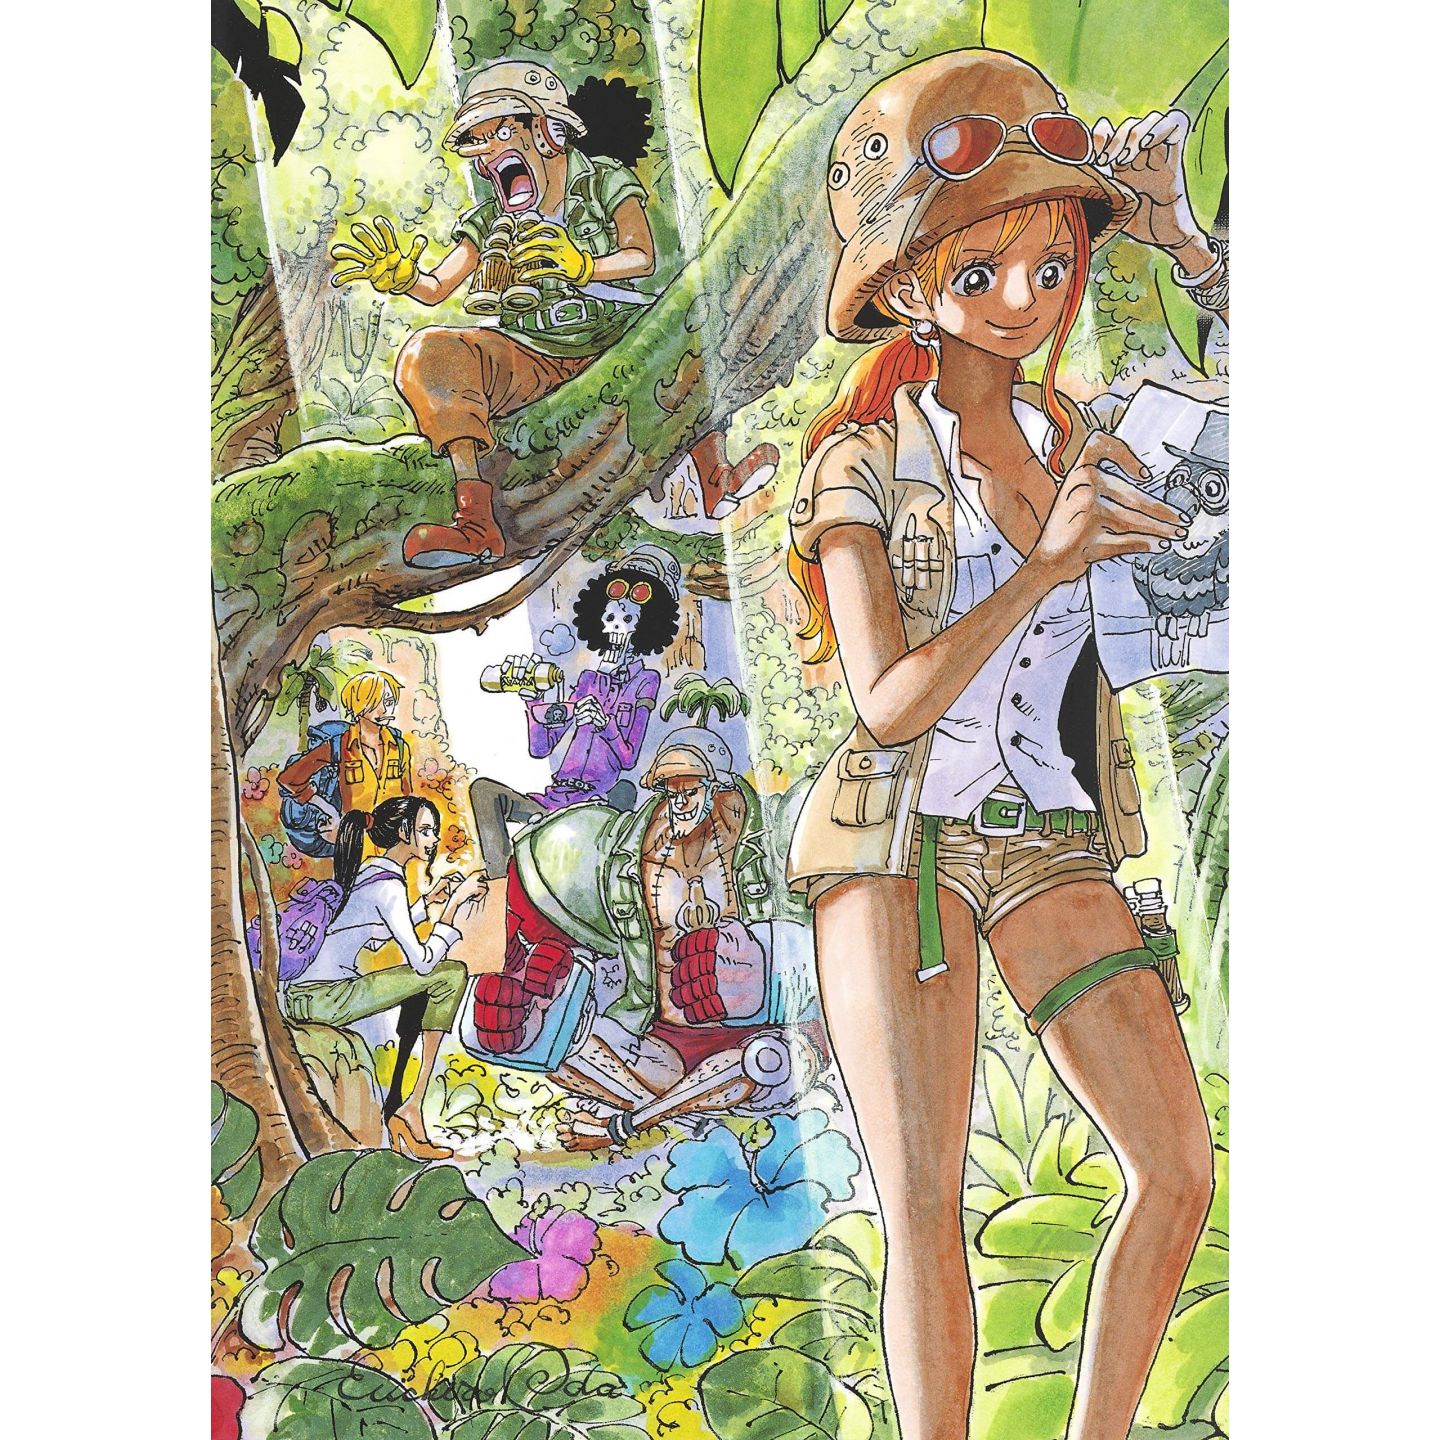 Artbook One Piece Colorwalk 9 Tiger Eiichiro Oda